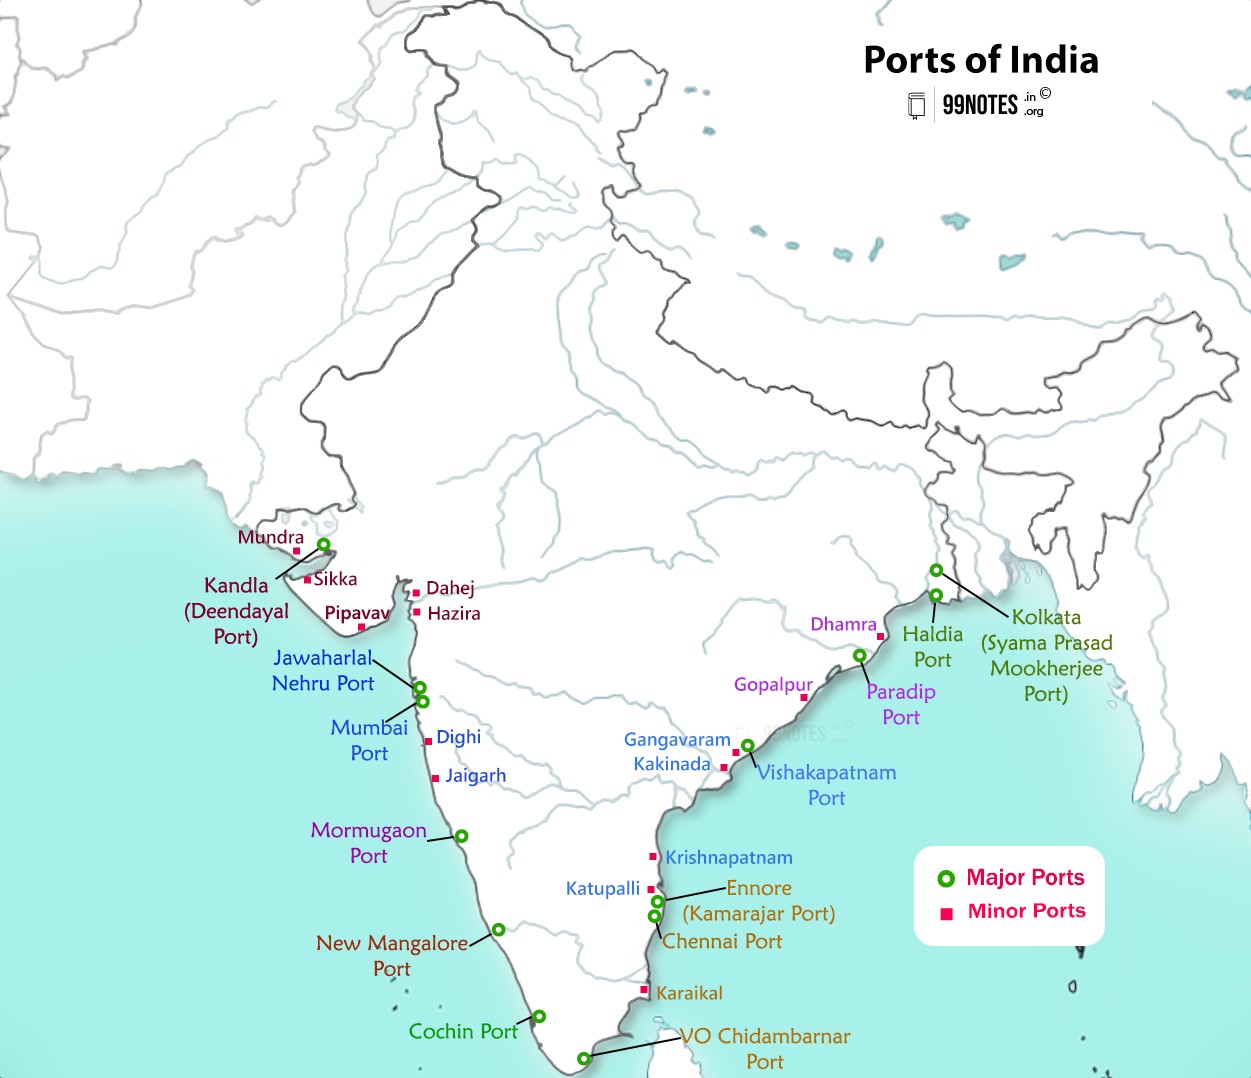 Ports Of India Map- Makor And Minor Ports